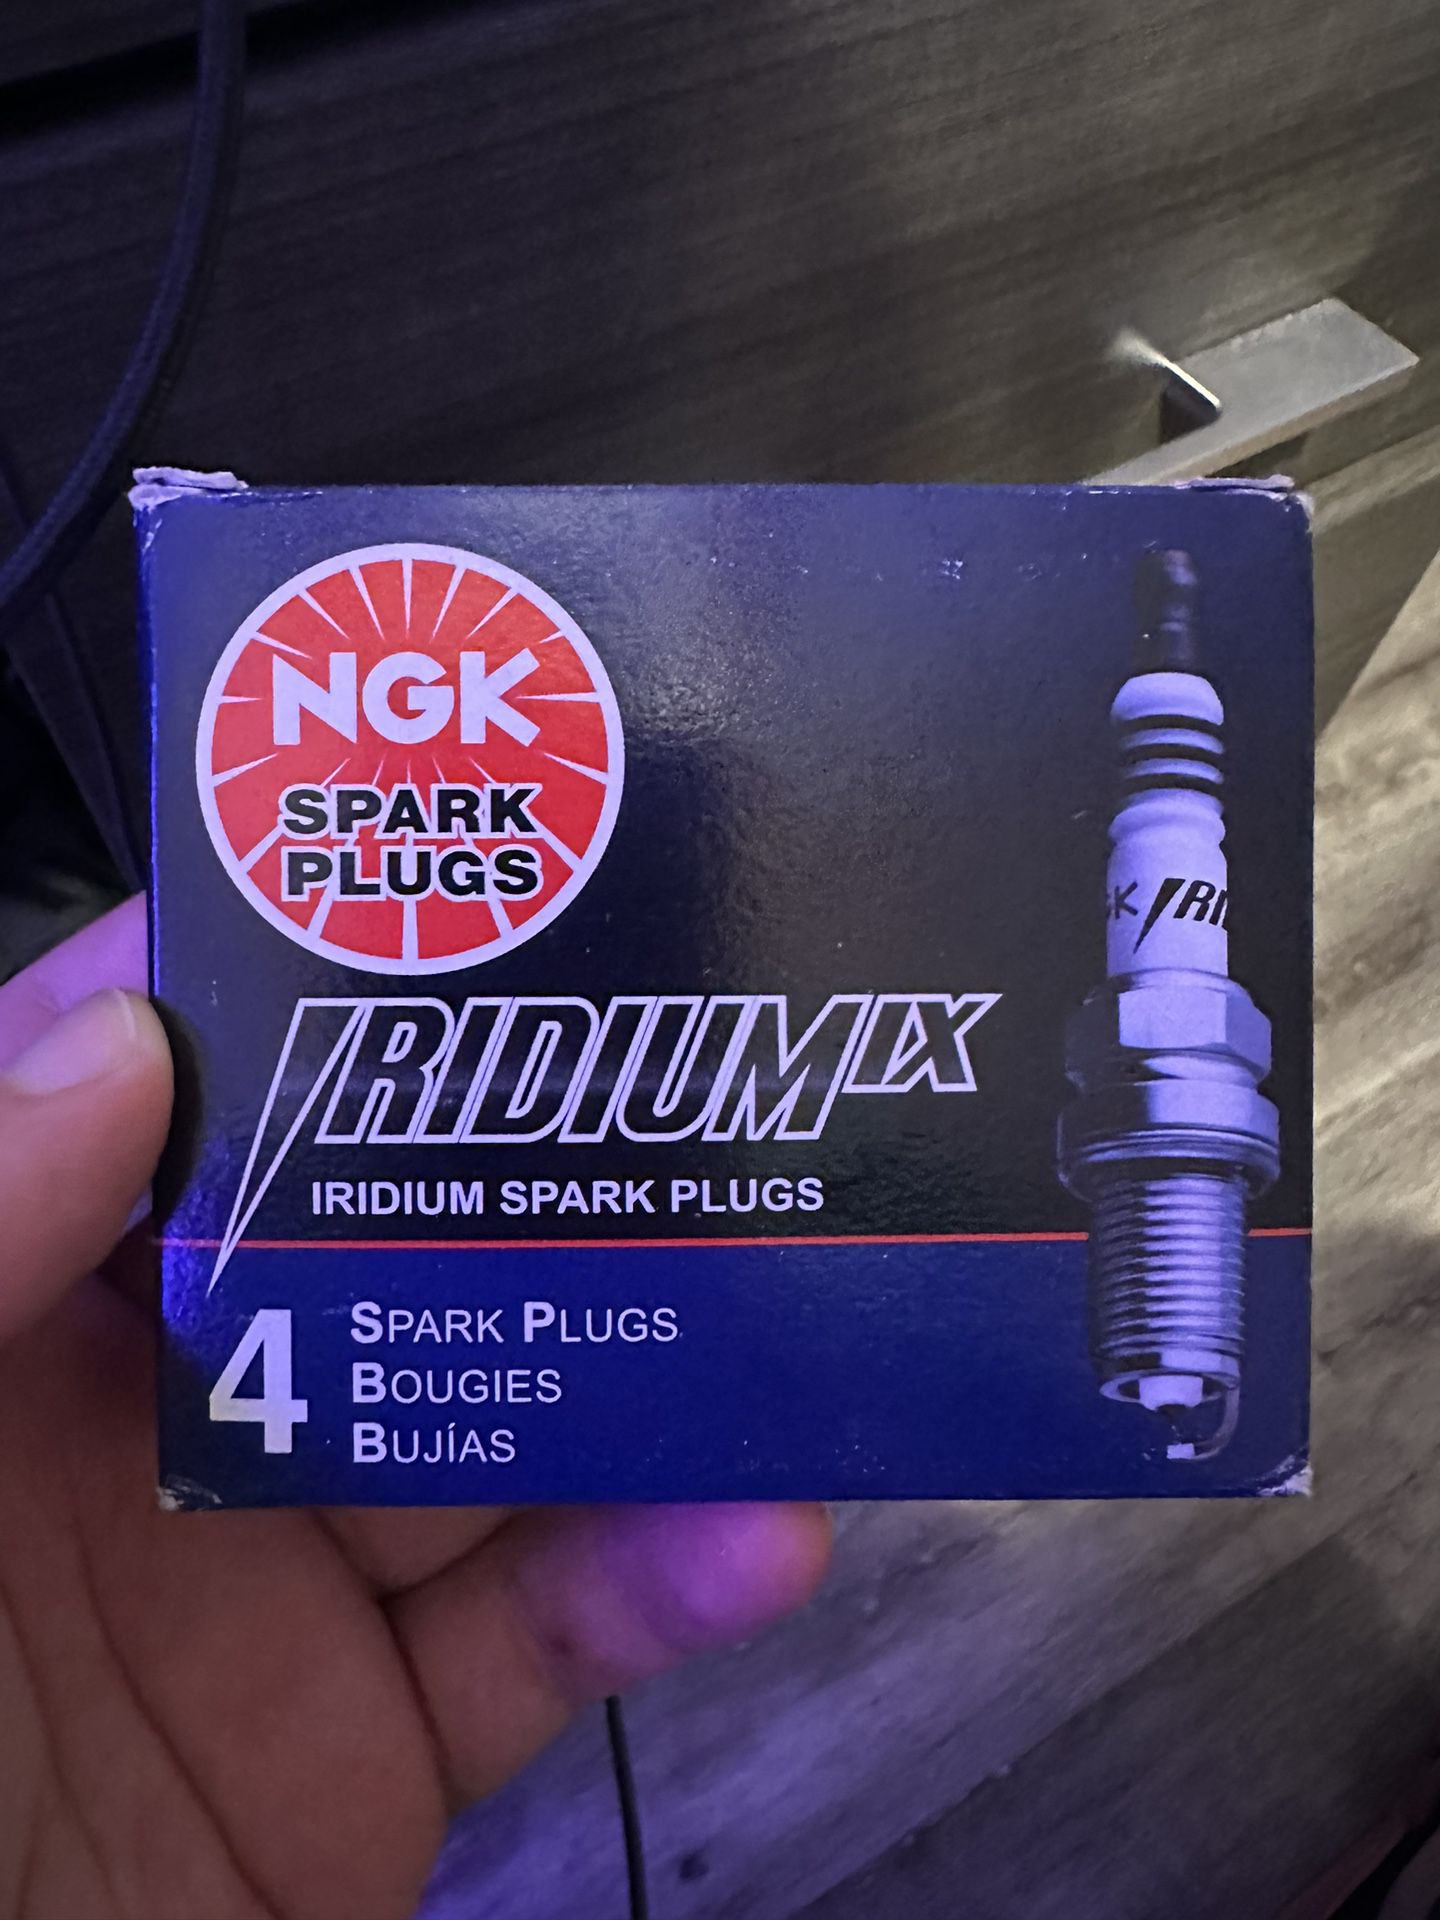 NGK spark plugs